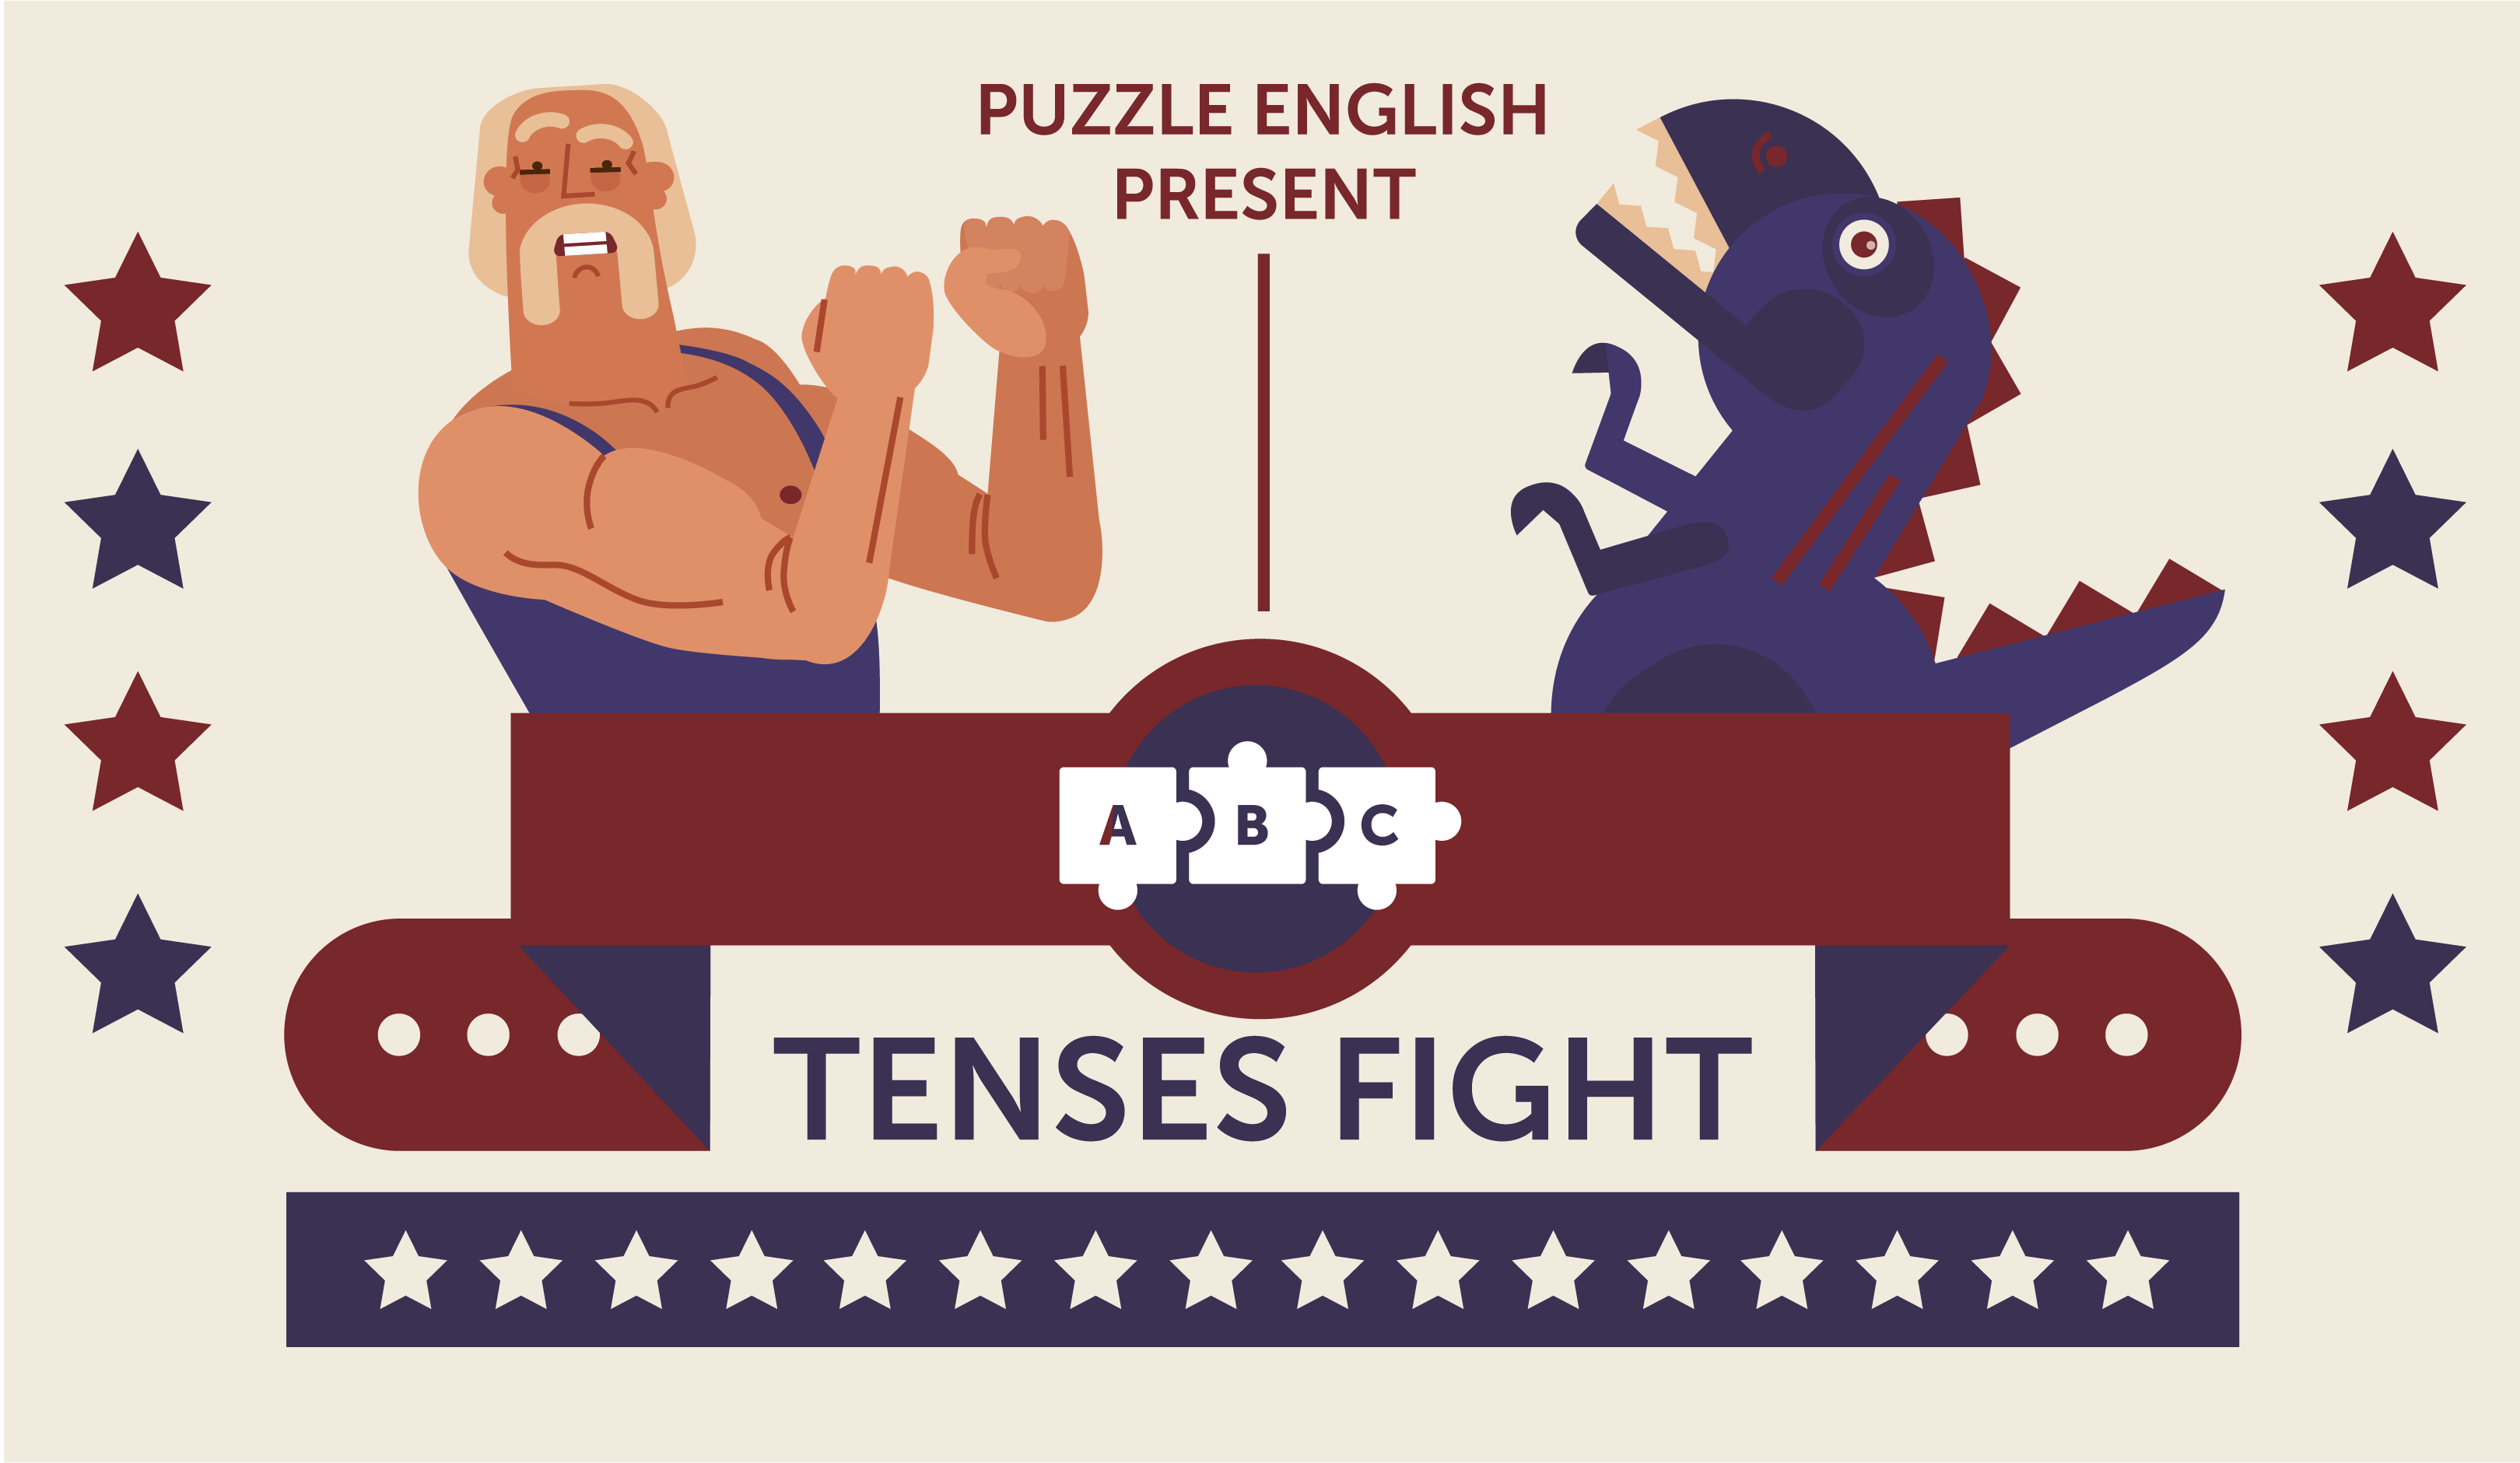 Puzzle English. Grammar Puzzle English. Puzzle English logo.